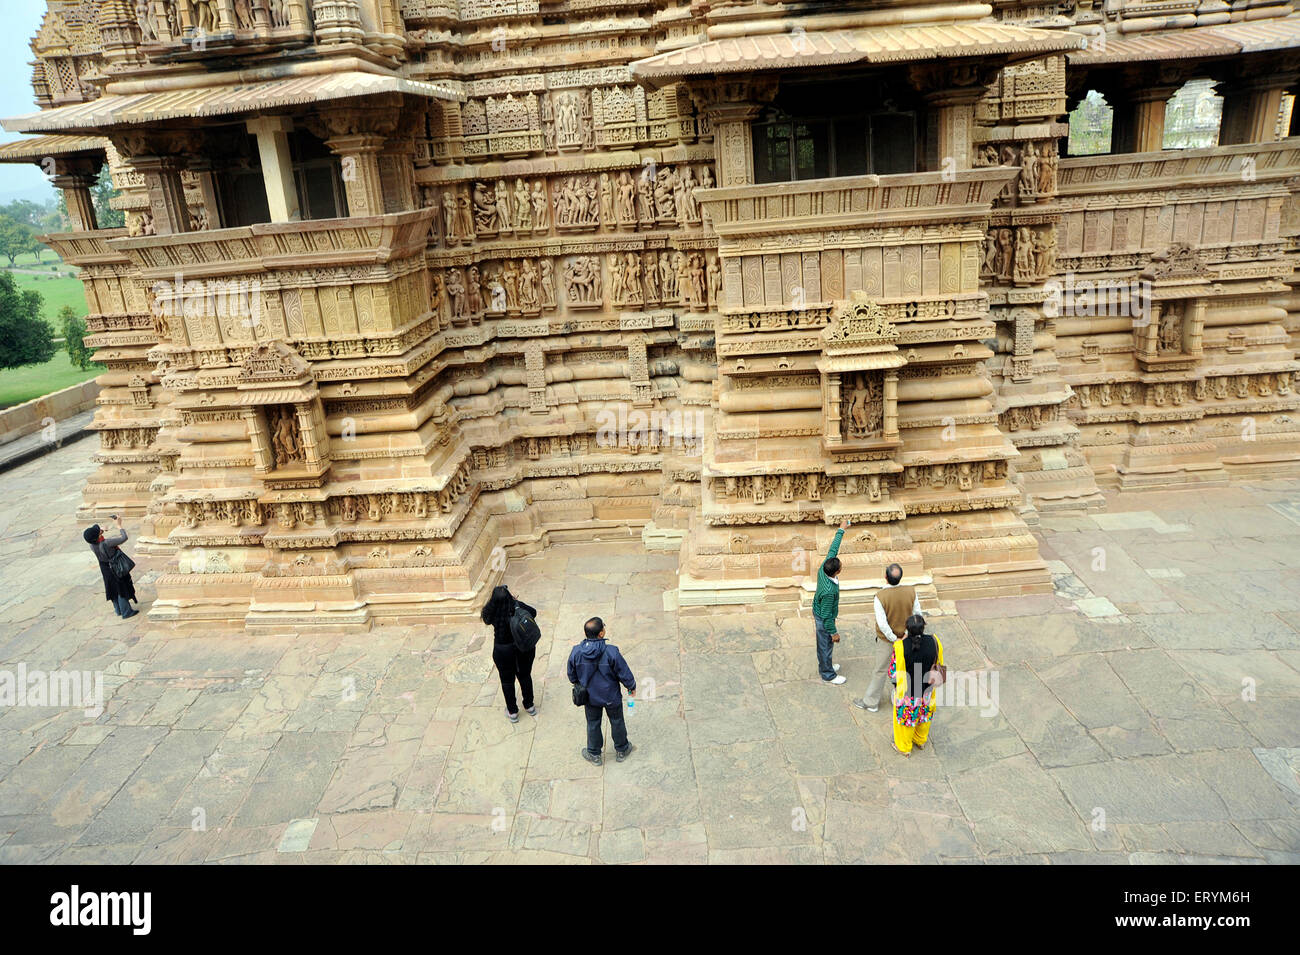 Lakshman temple Khajuraho Madhya Pradesh India Asia Stock Photo